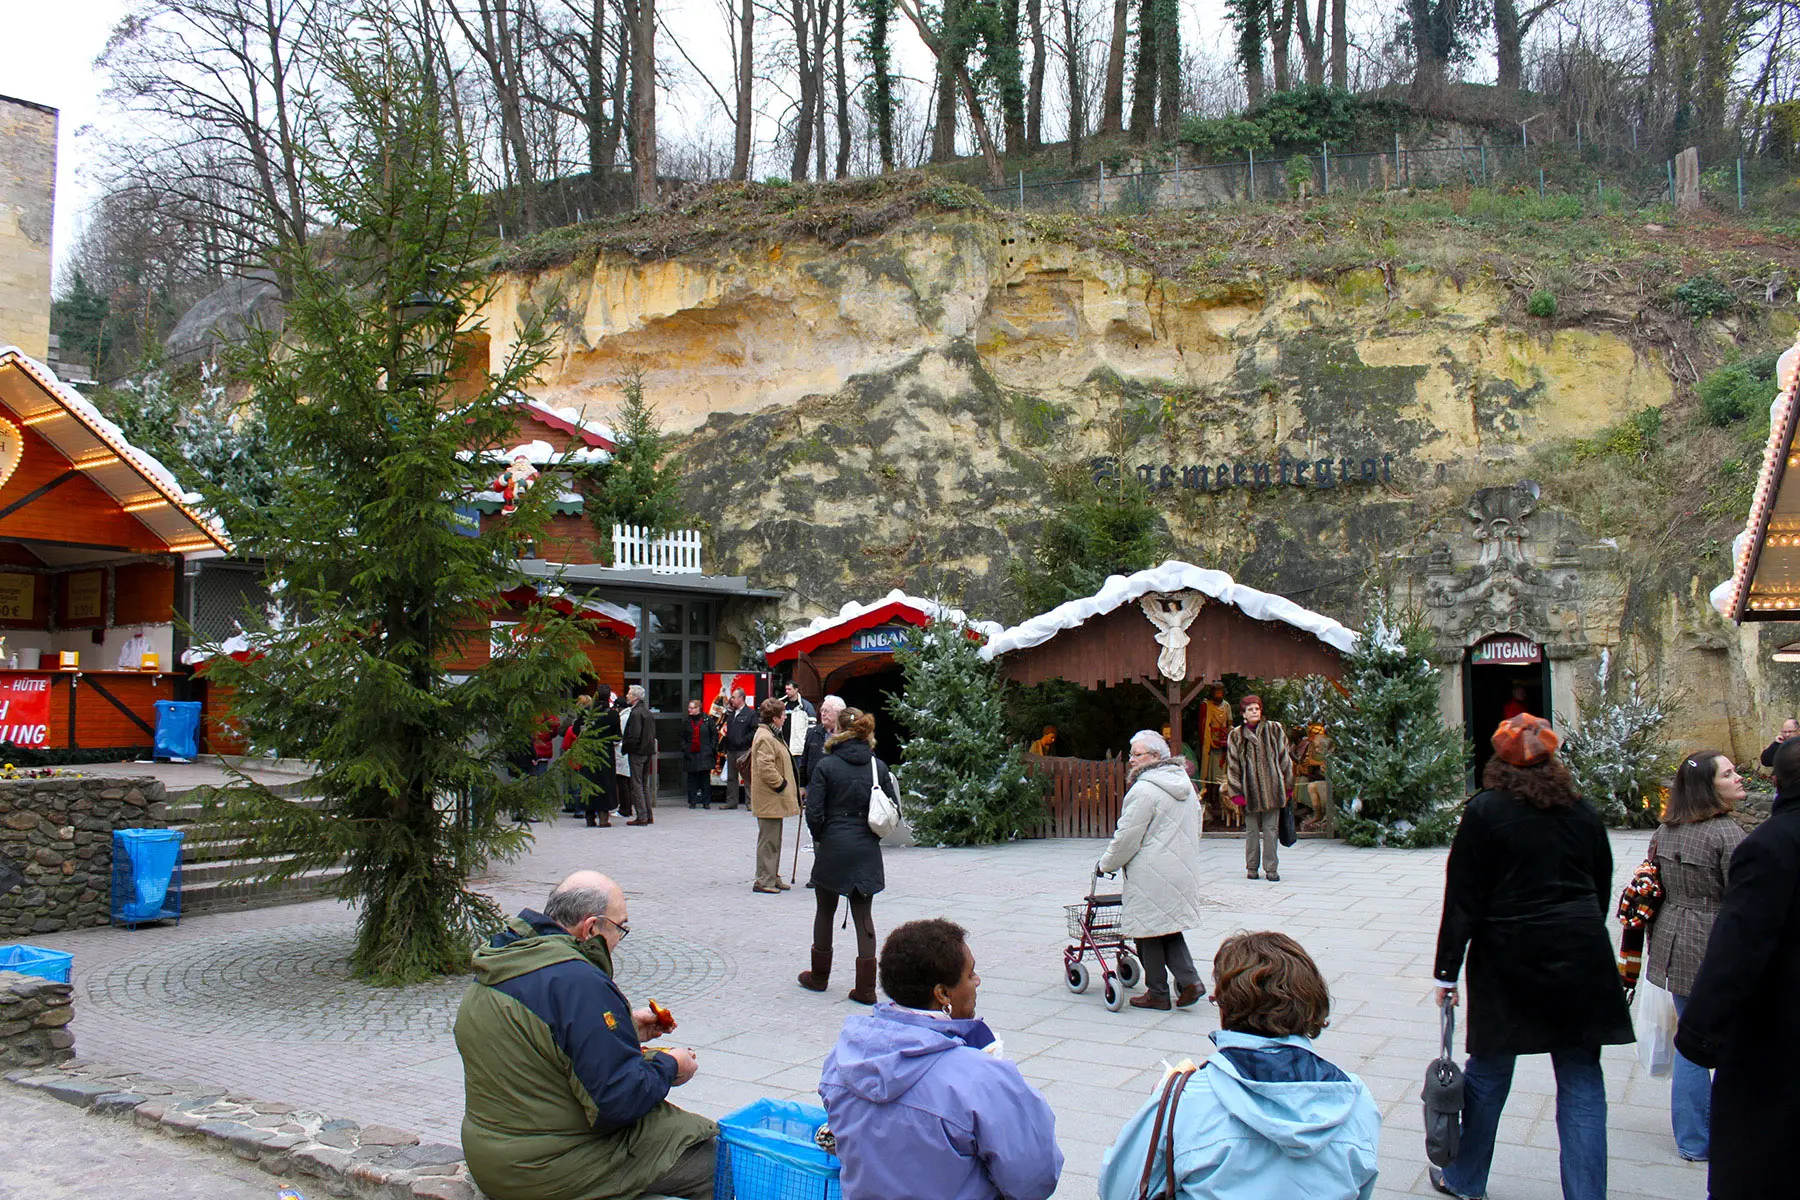 Valkenburg Christmas market